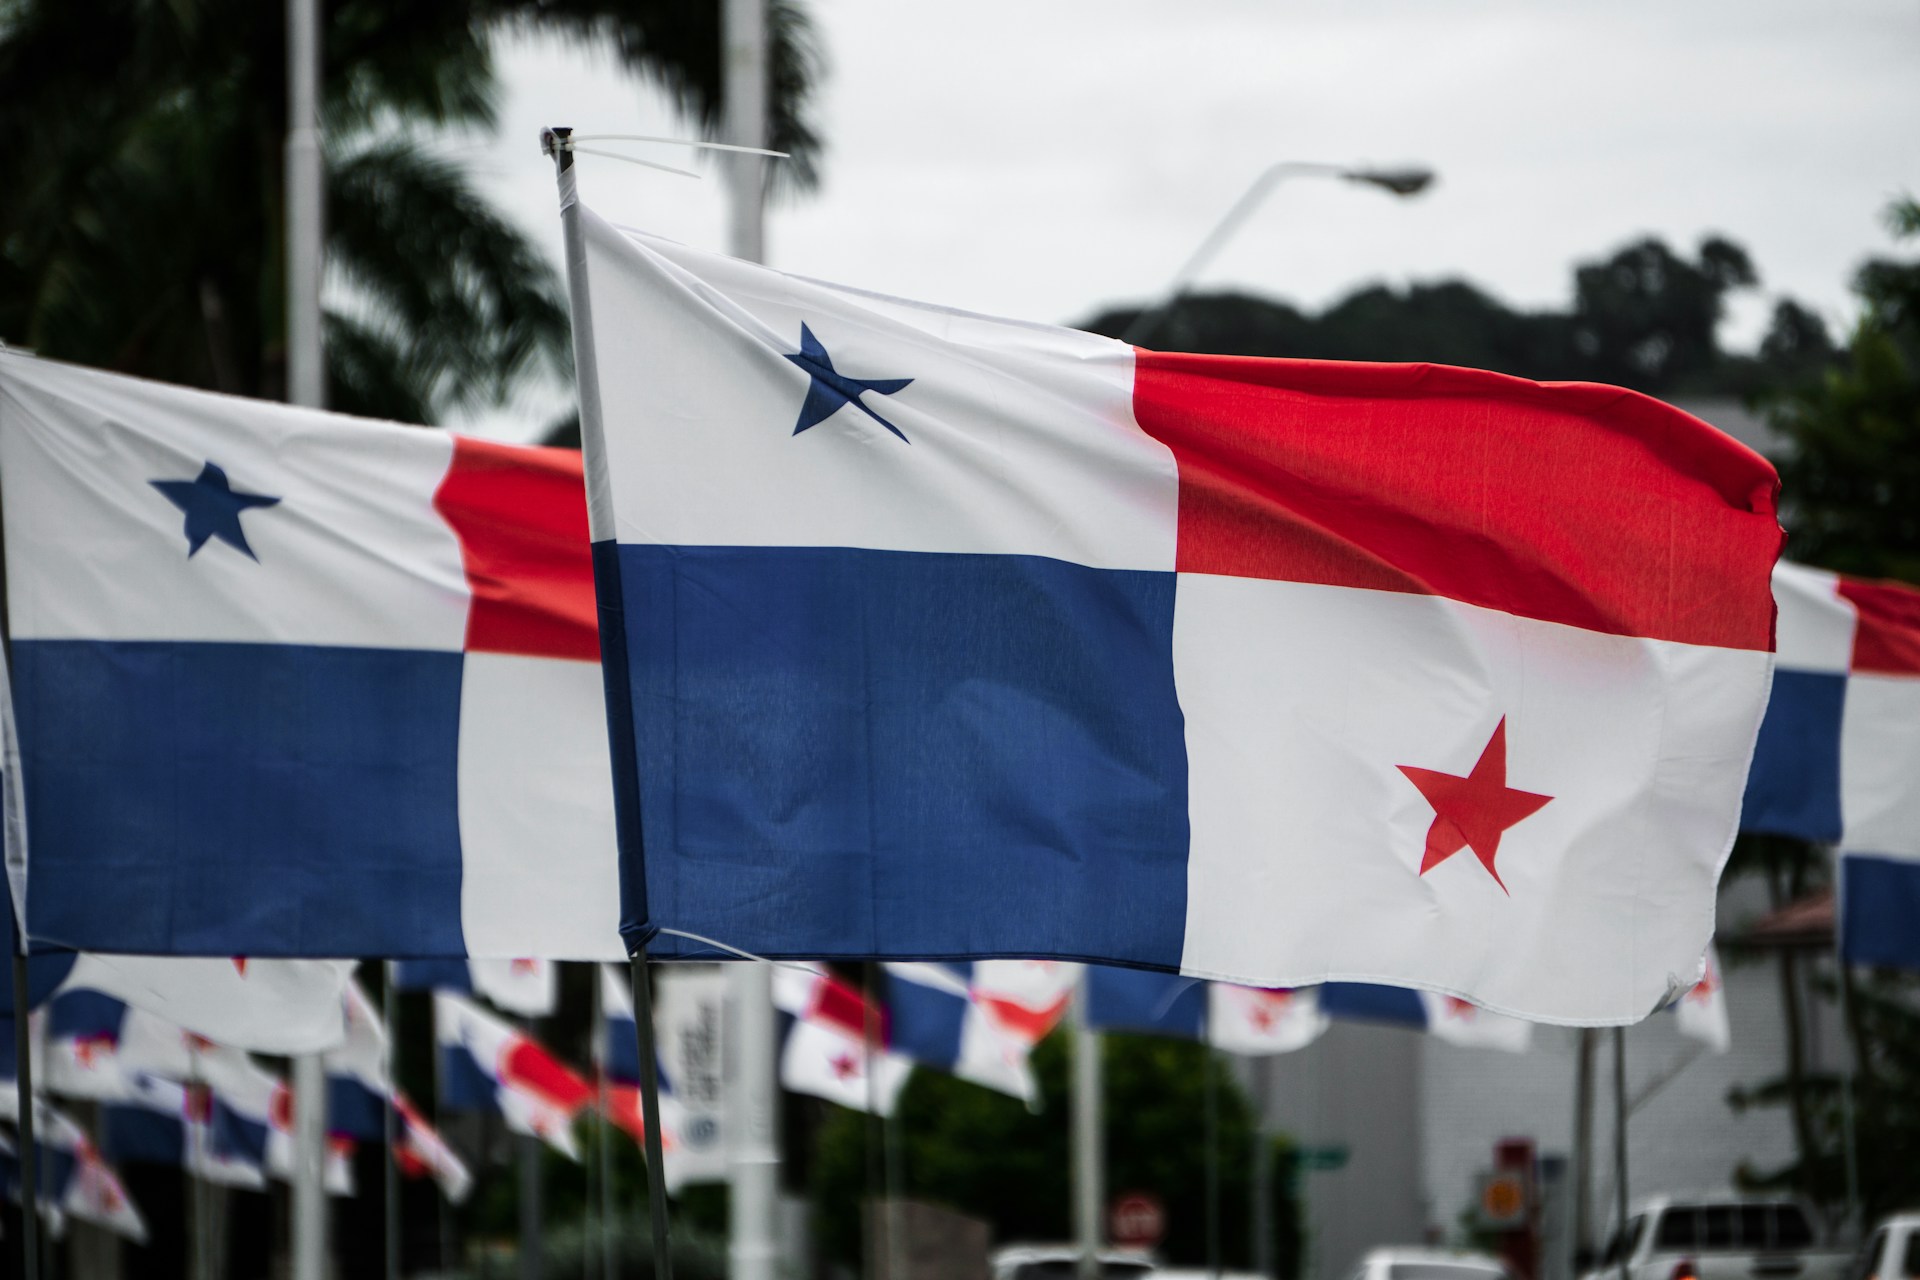 Panamanian flags